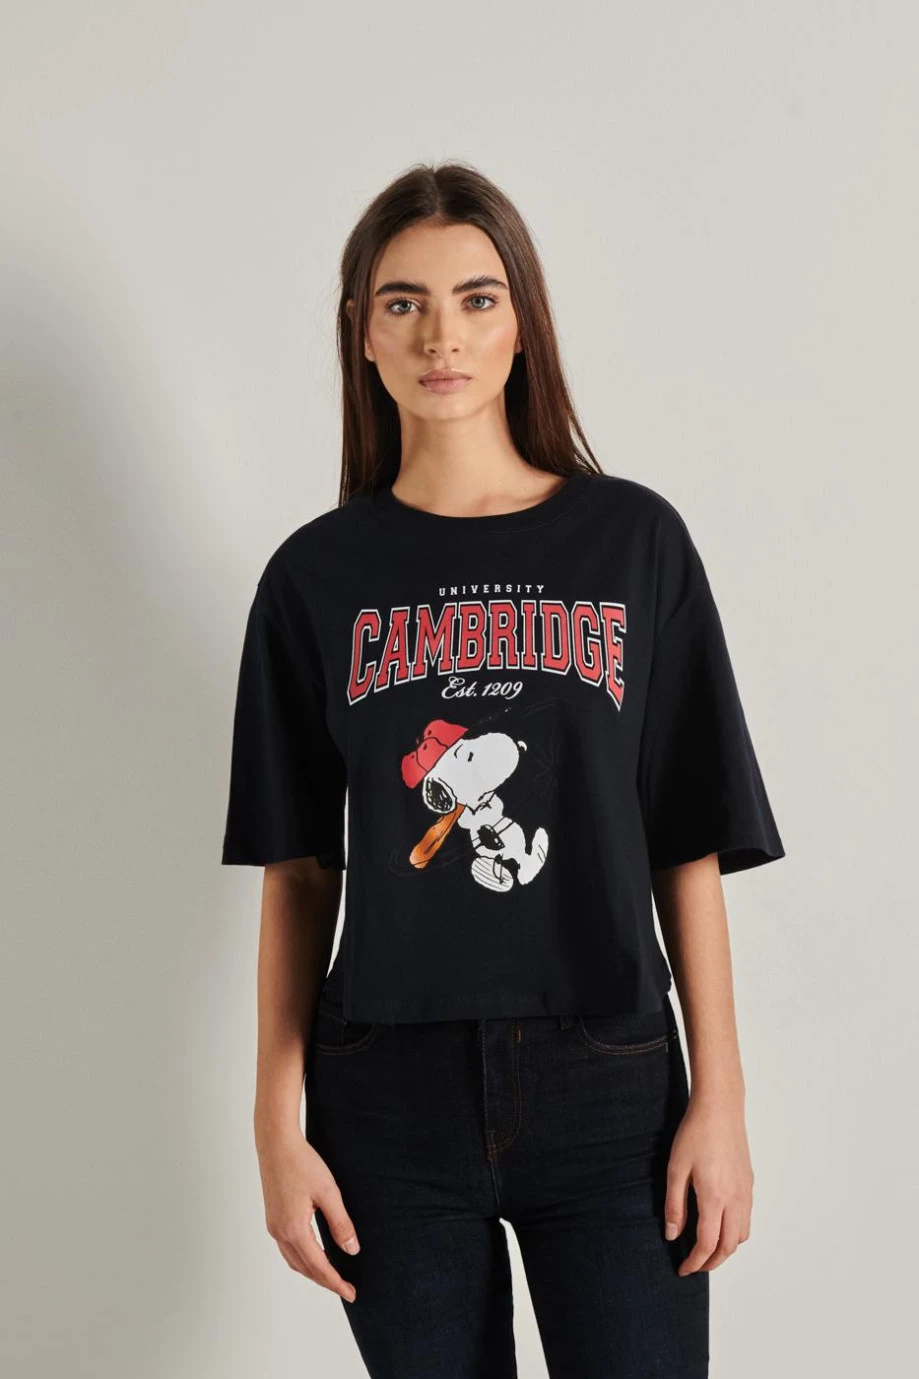 Camiseta crop top oversize azul intensa con diseño college de Snoopy & Cambridge